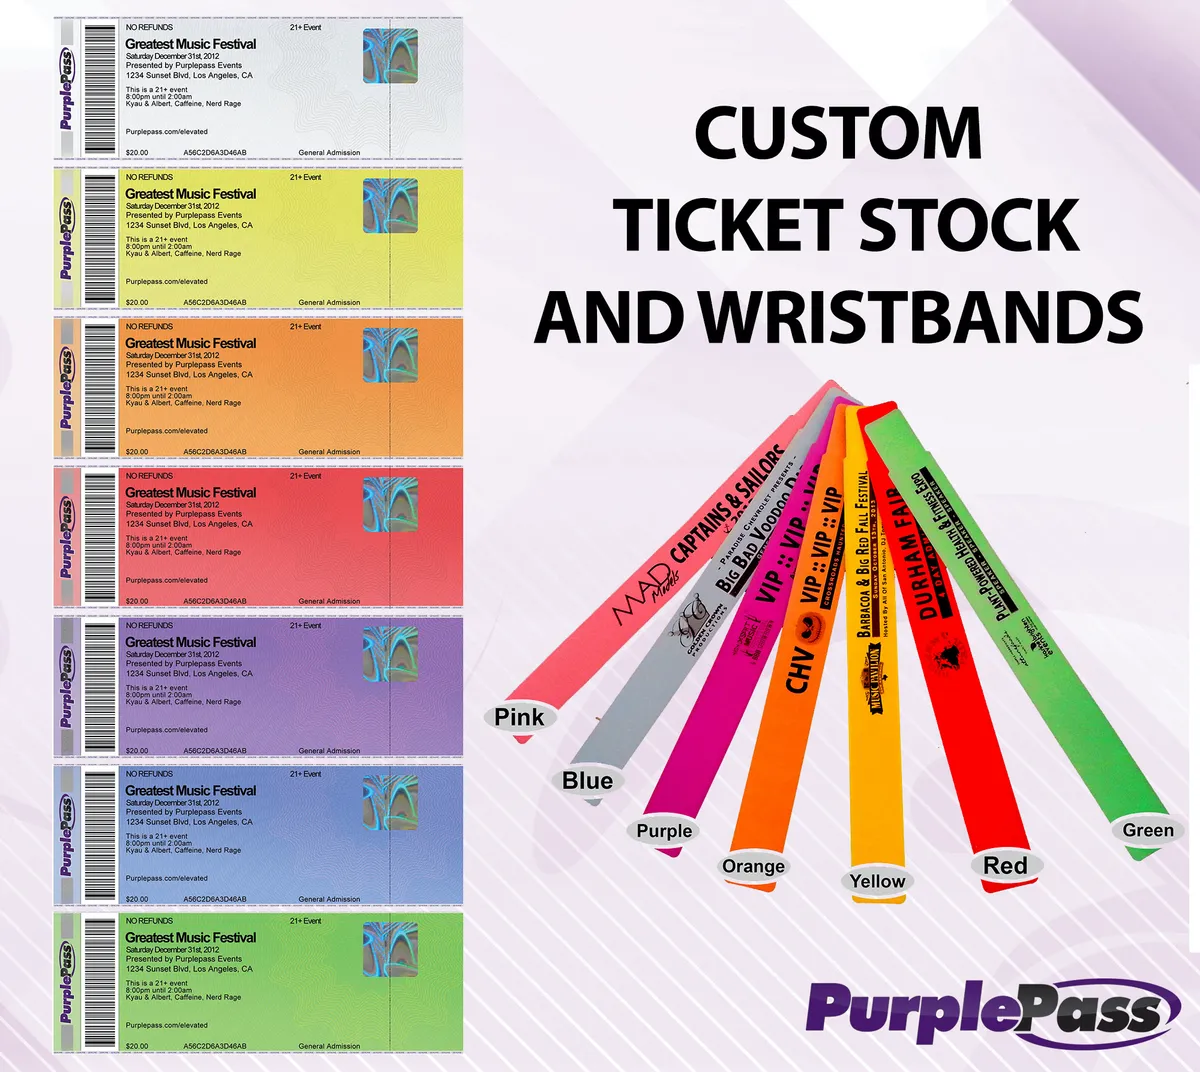 Purplepass Ticketing Features